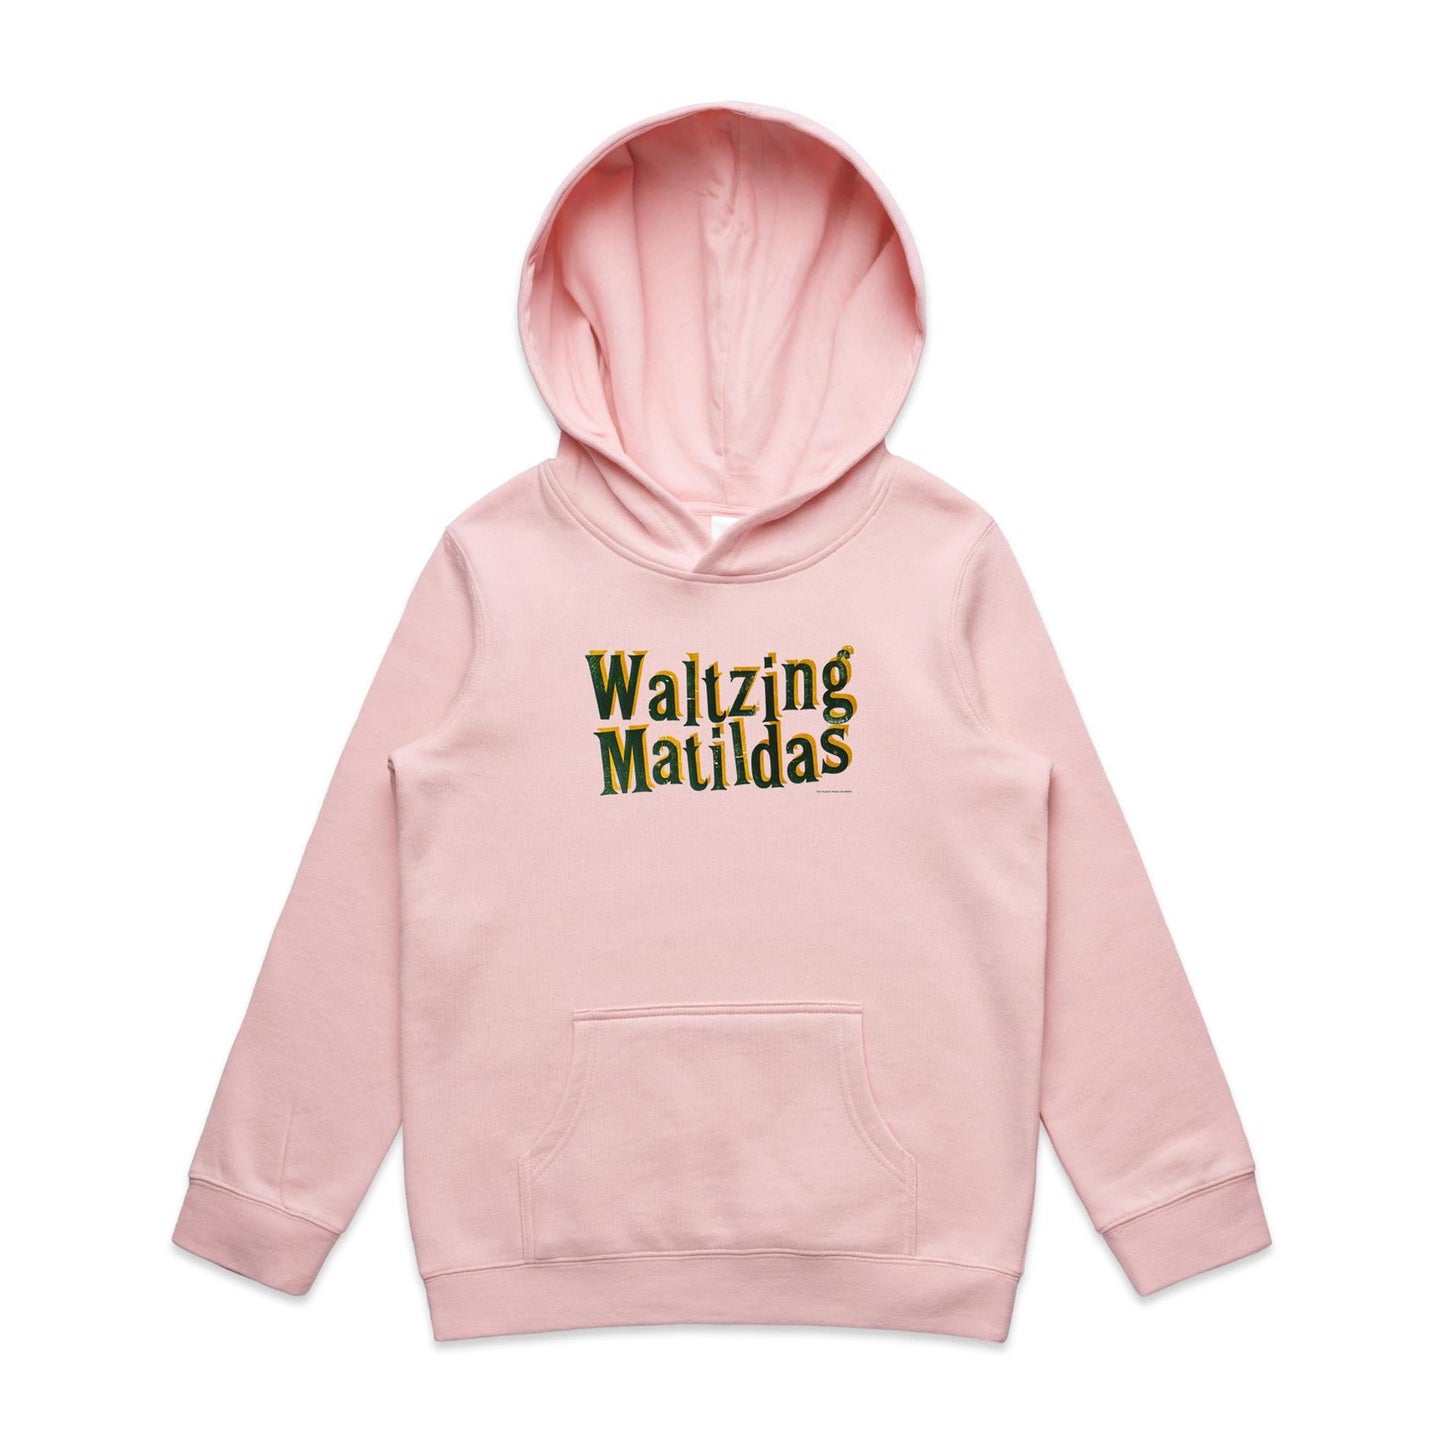 Waltzing Matildas Hoodies for Kids